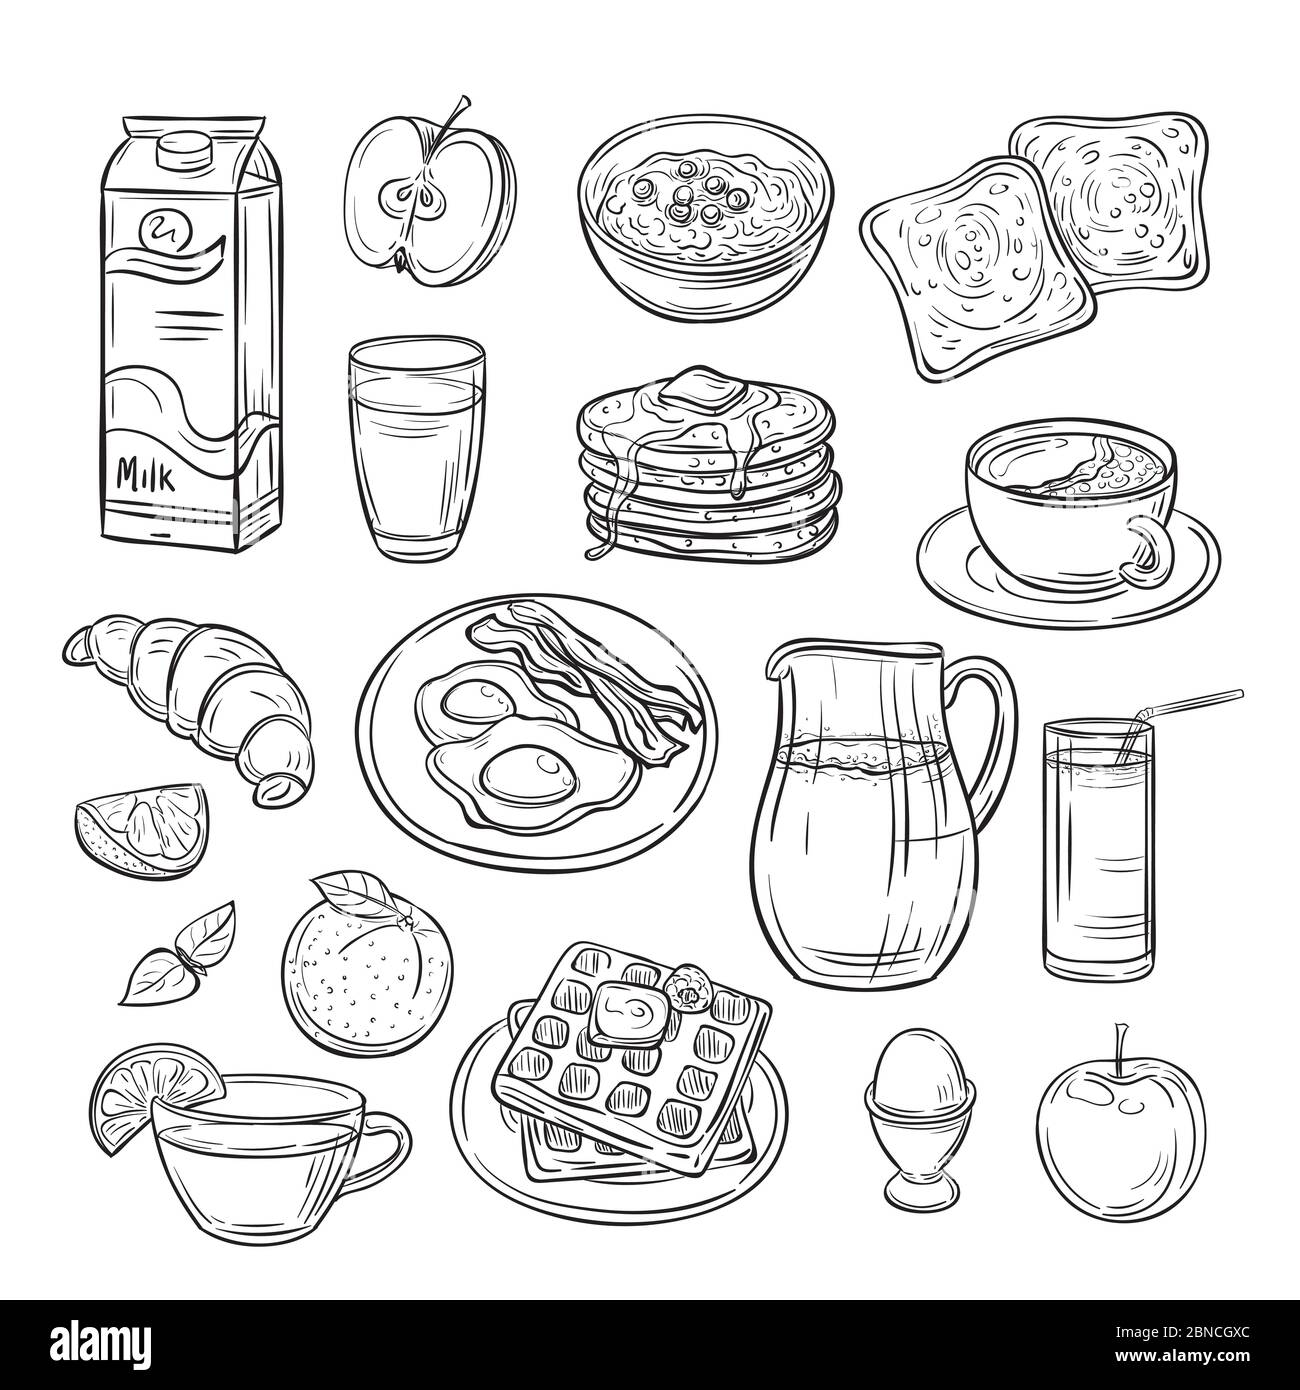 Frühstück Doodle. Sandwich Brot Toast Eierbutter, Kaffee und Käse Skizze gesunde Lebensmittel vintage Vektor-Set. Sandwich und Kaffee zum Frühstück, Toast und Eier Illustration Stock Vektor